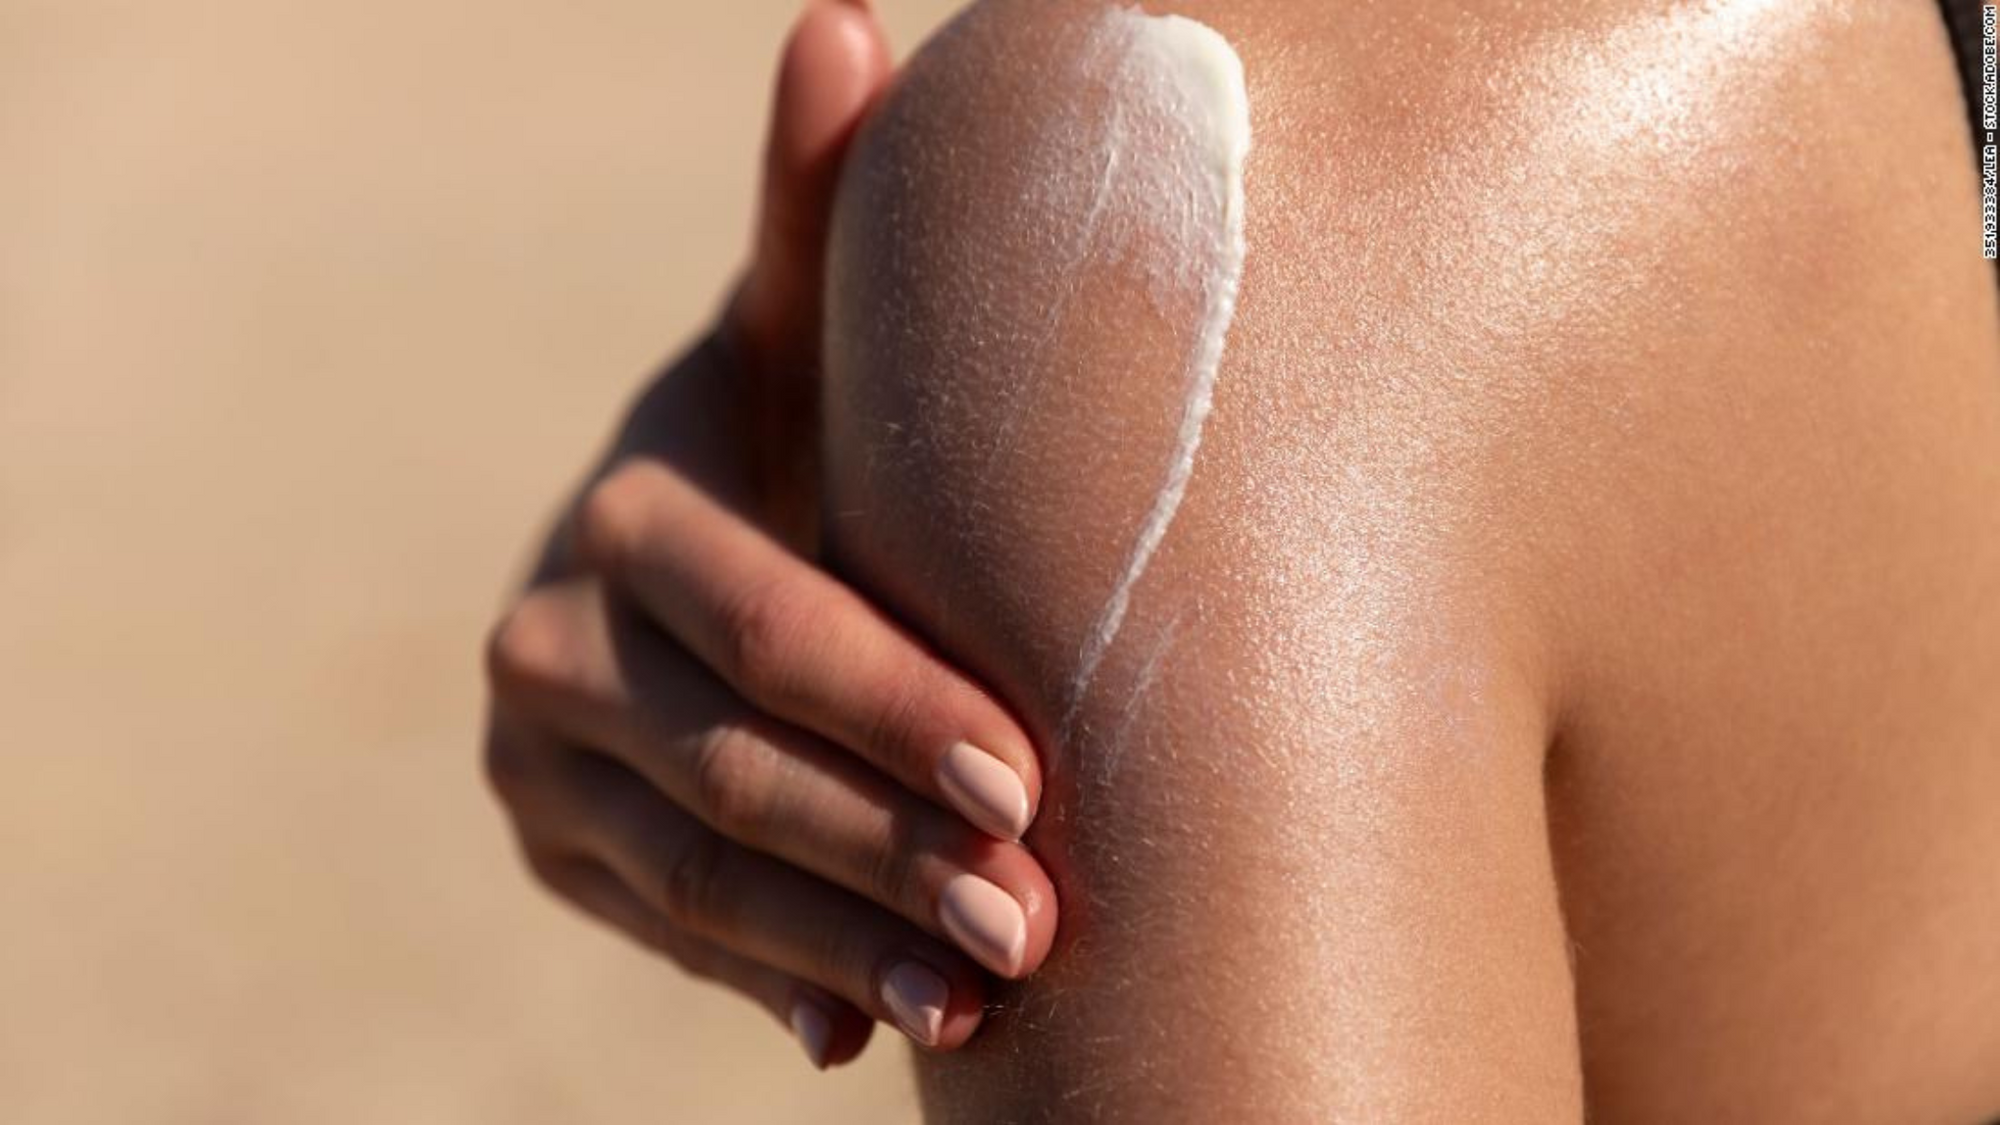 Keep skin cancer at bay and avoid tanning